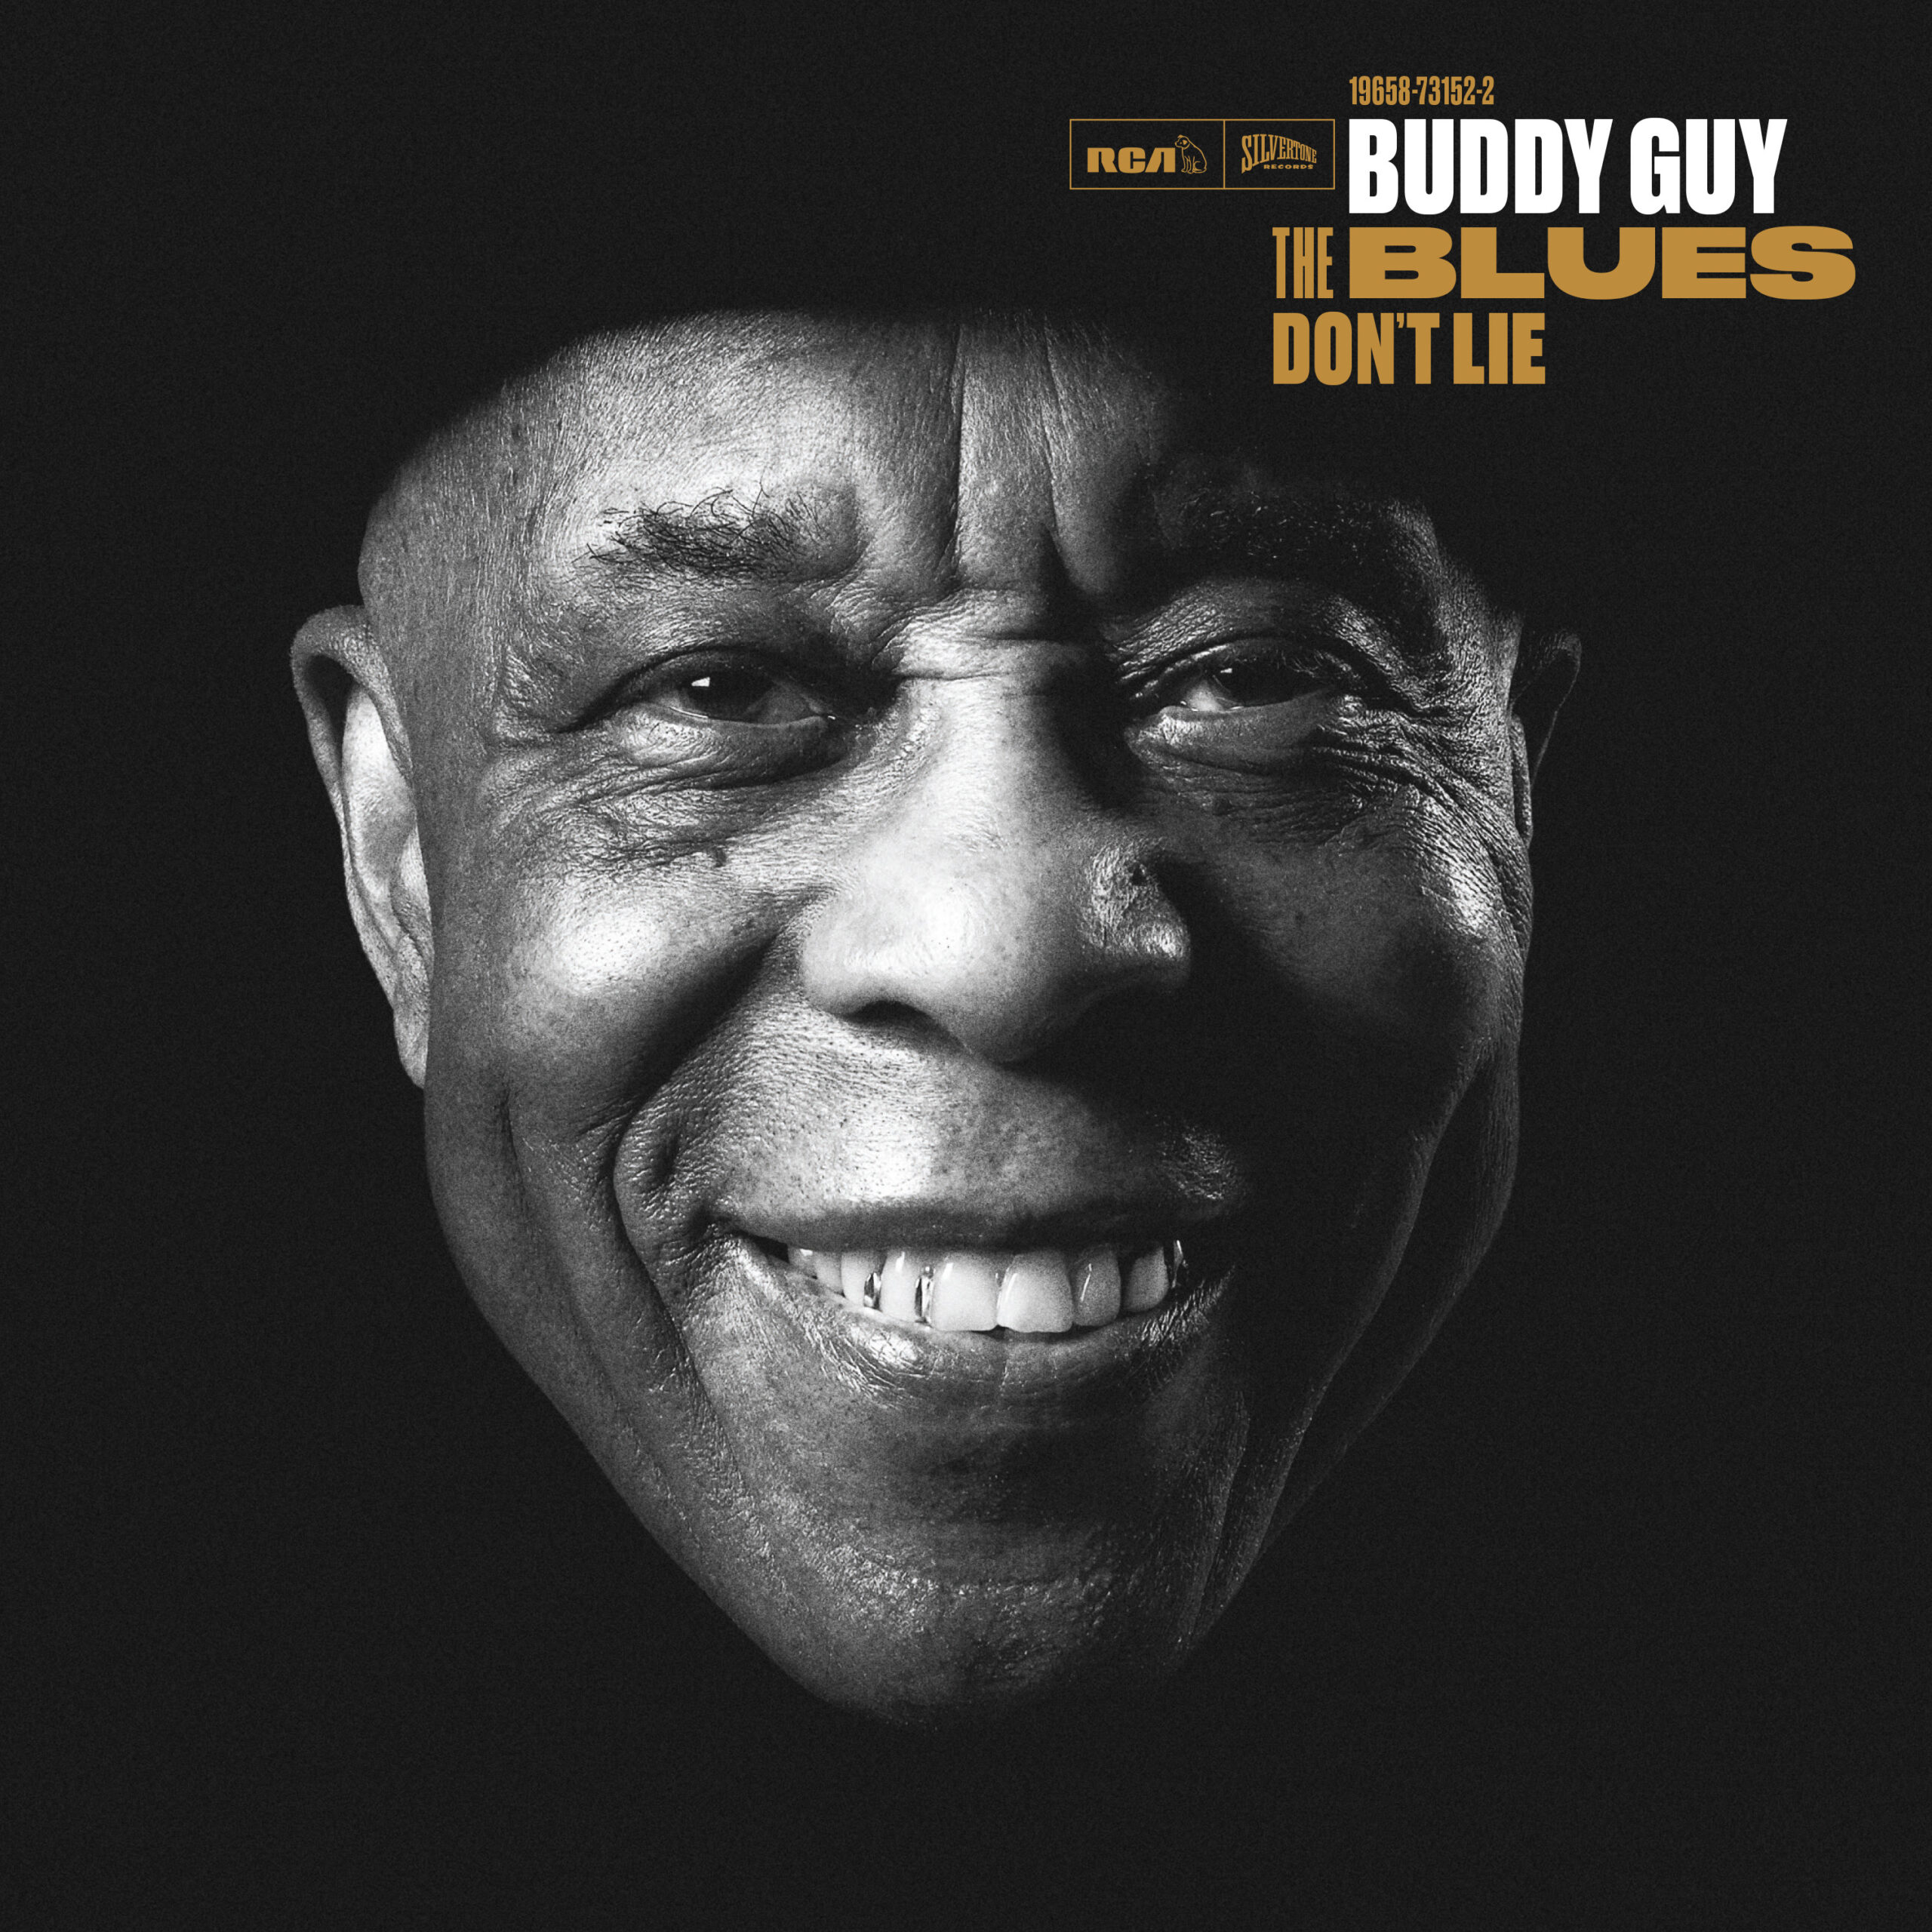 Buddy Guy
Tidal : The Blues don't lie